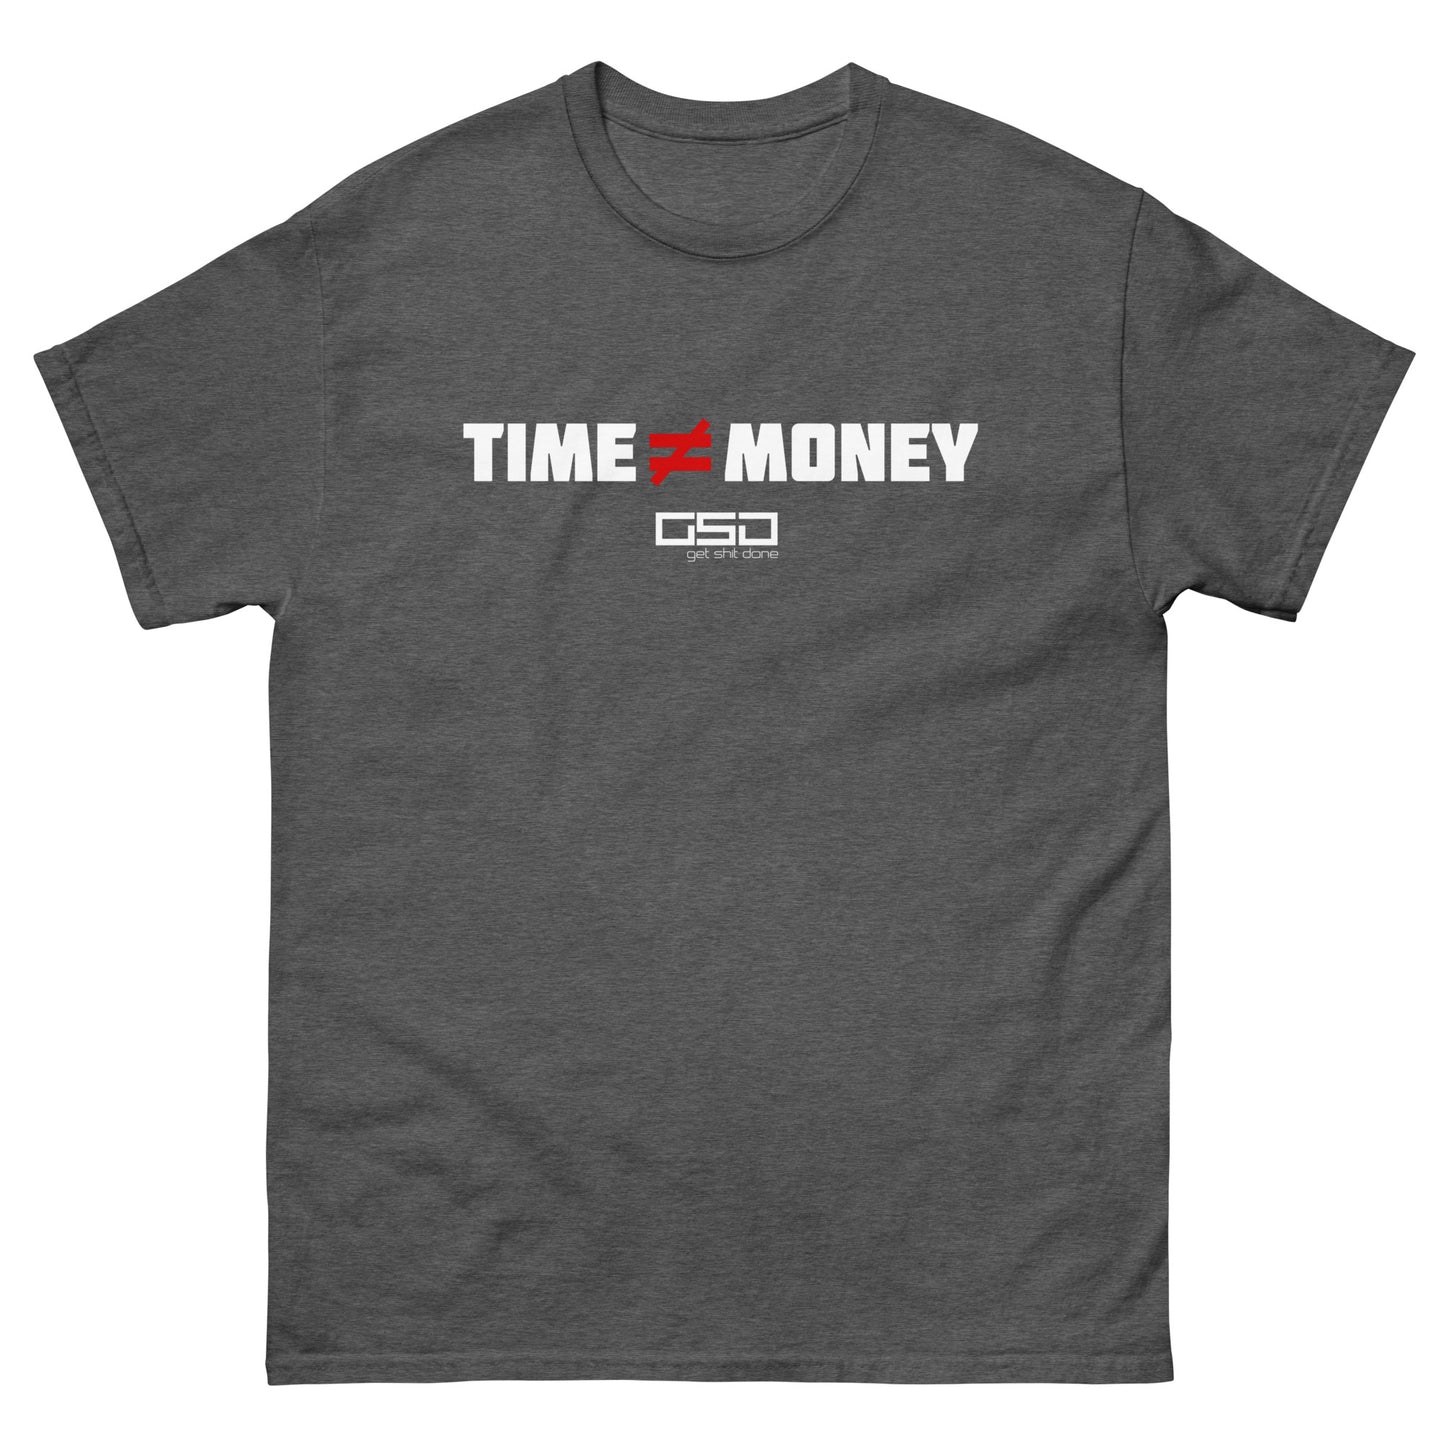 Time ≠ Money-Classic tee